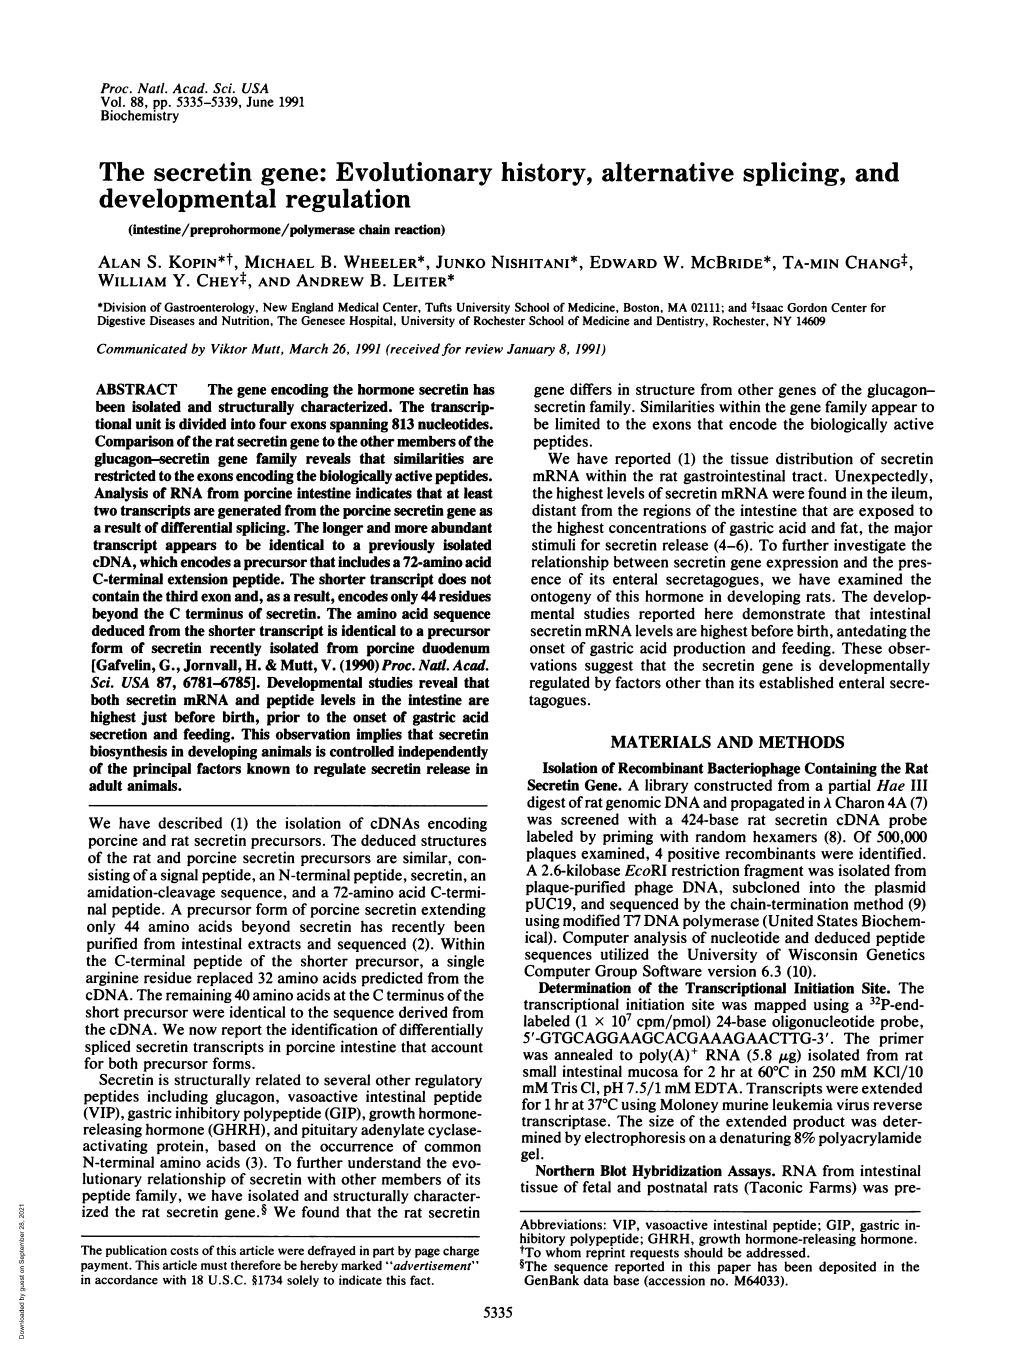 The Secretin Gene: Evolutionary History, Alternative Splicing, and Developmental Regulation (Intestine/Preprohormone/Polymerase Chain Reaction) ALAN S